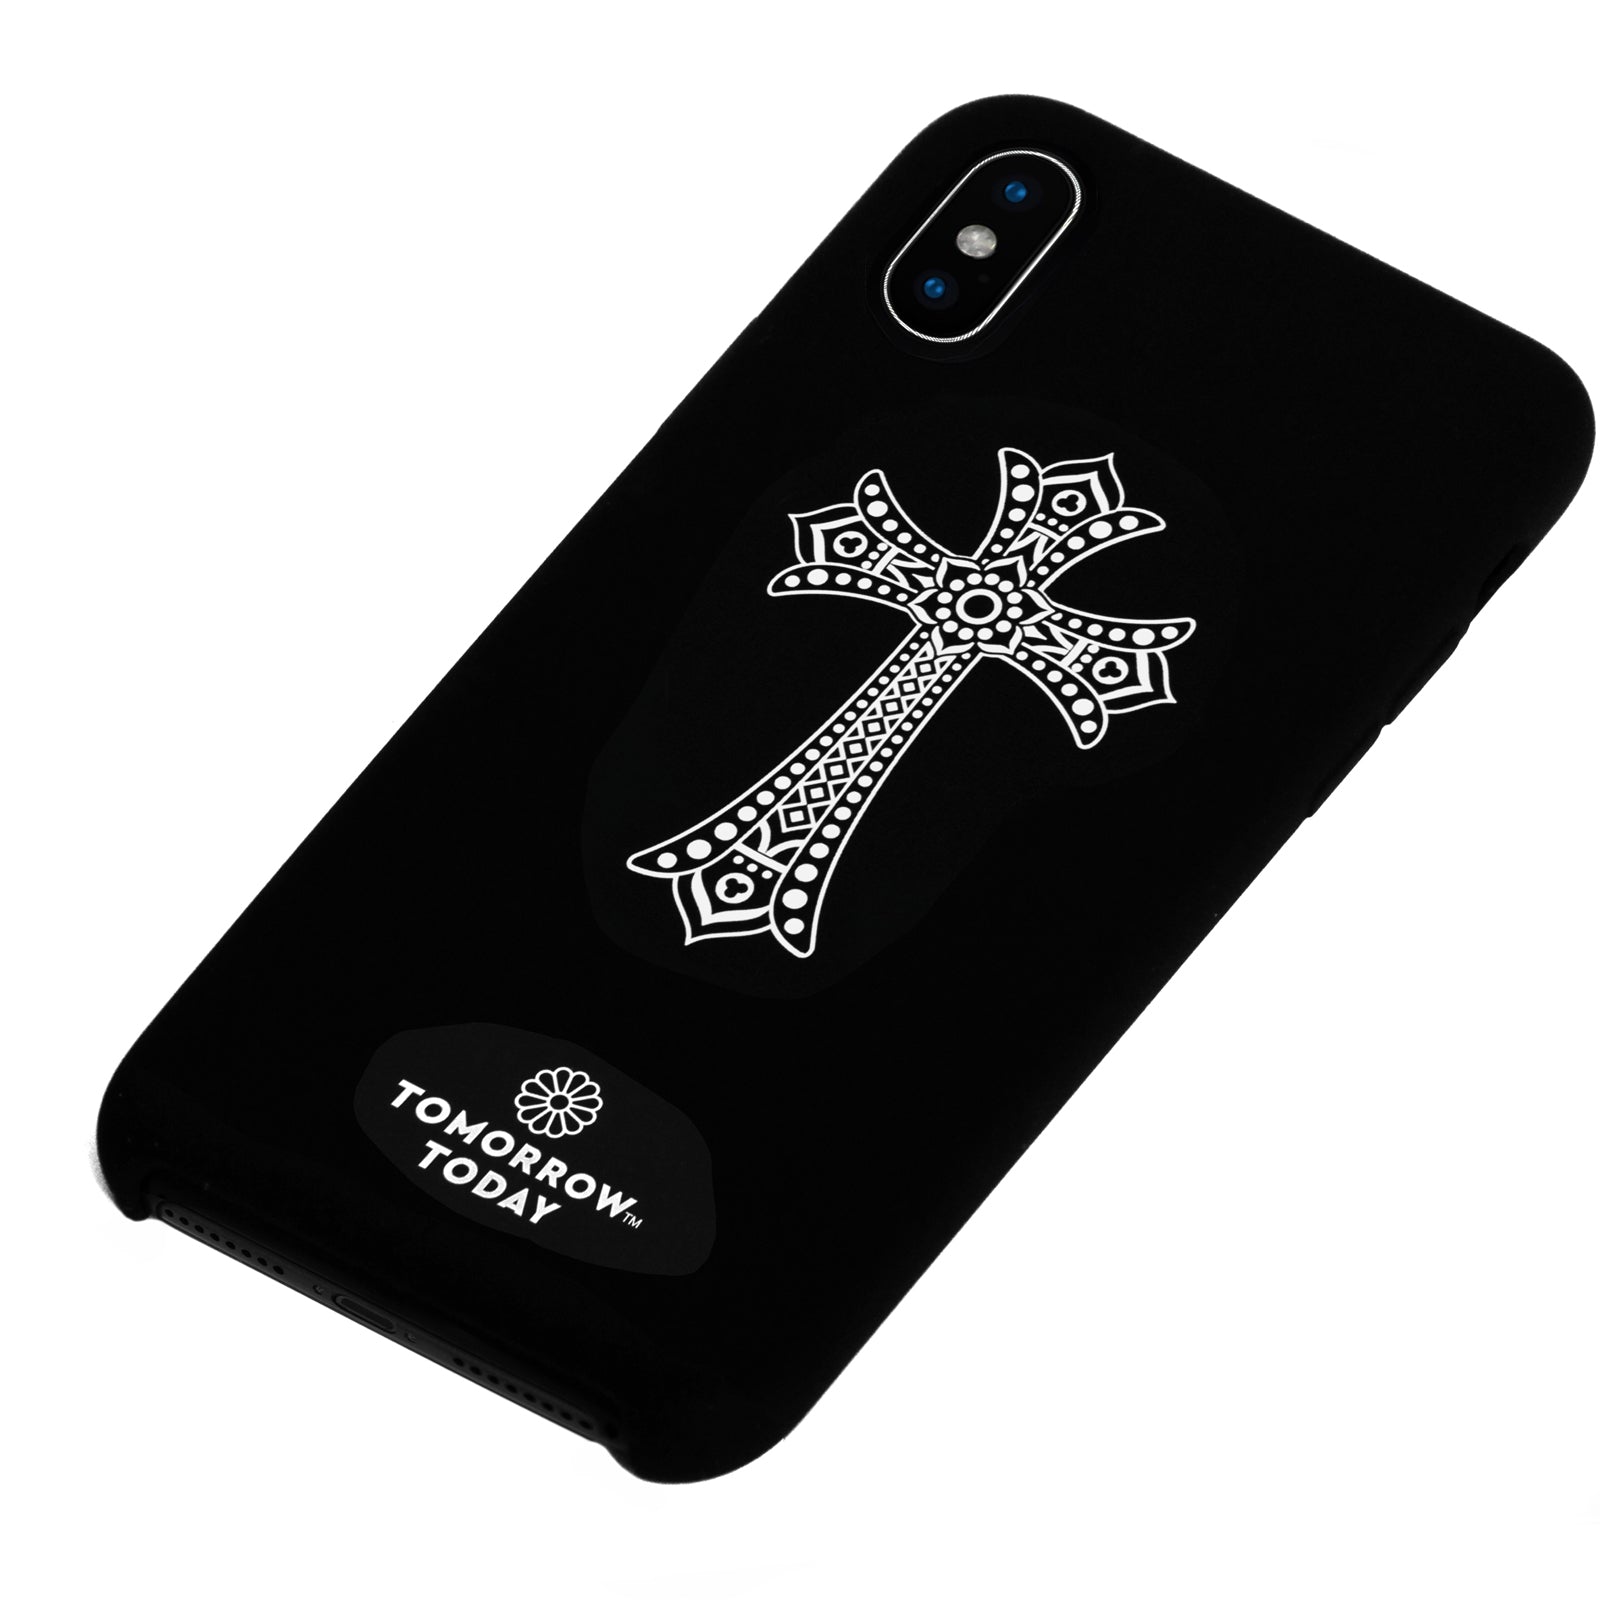 The Cross - iPhone X Case